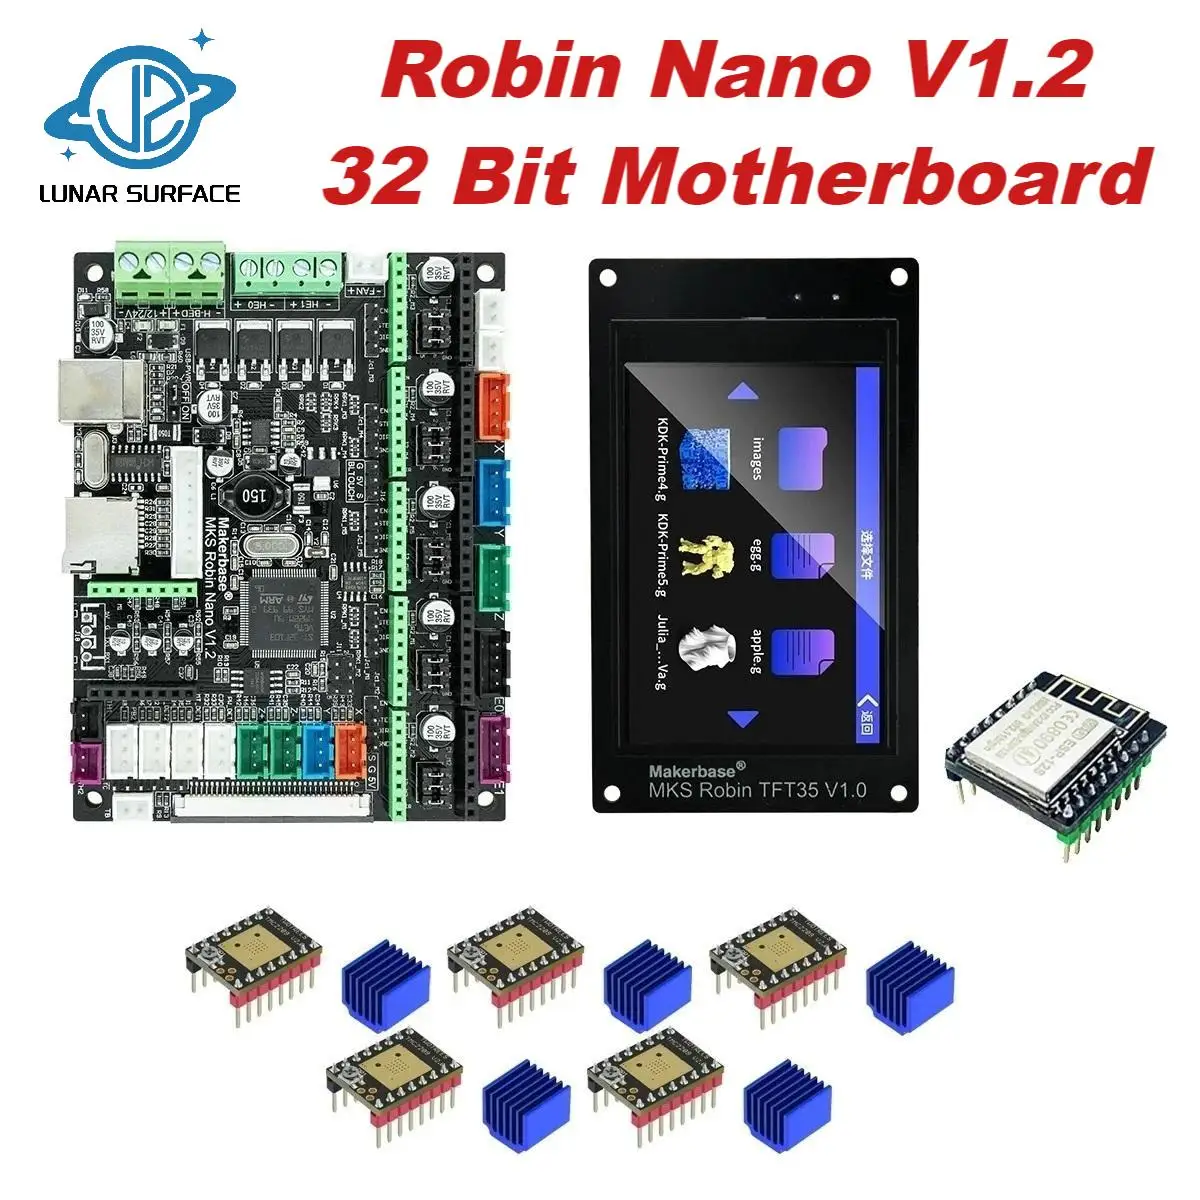 

LS-3D Printer Parts Makerbase Control Board MKS Robin Nano V1.2 32 Bit Motherboard Support Marlin2.0 TFT35 3.5 Inch Touch Screen